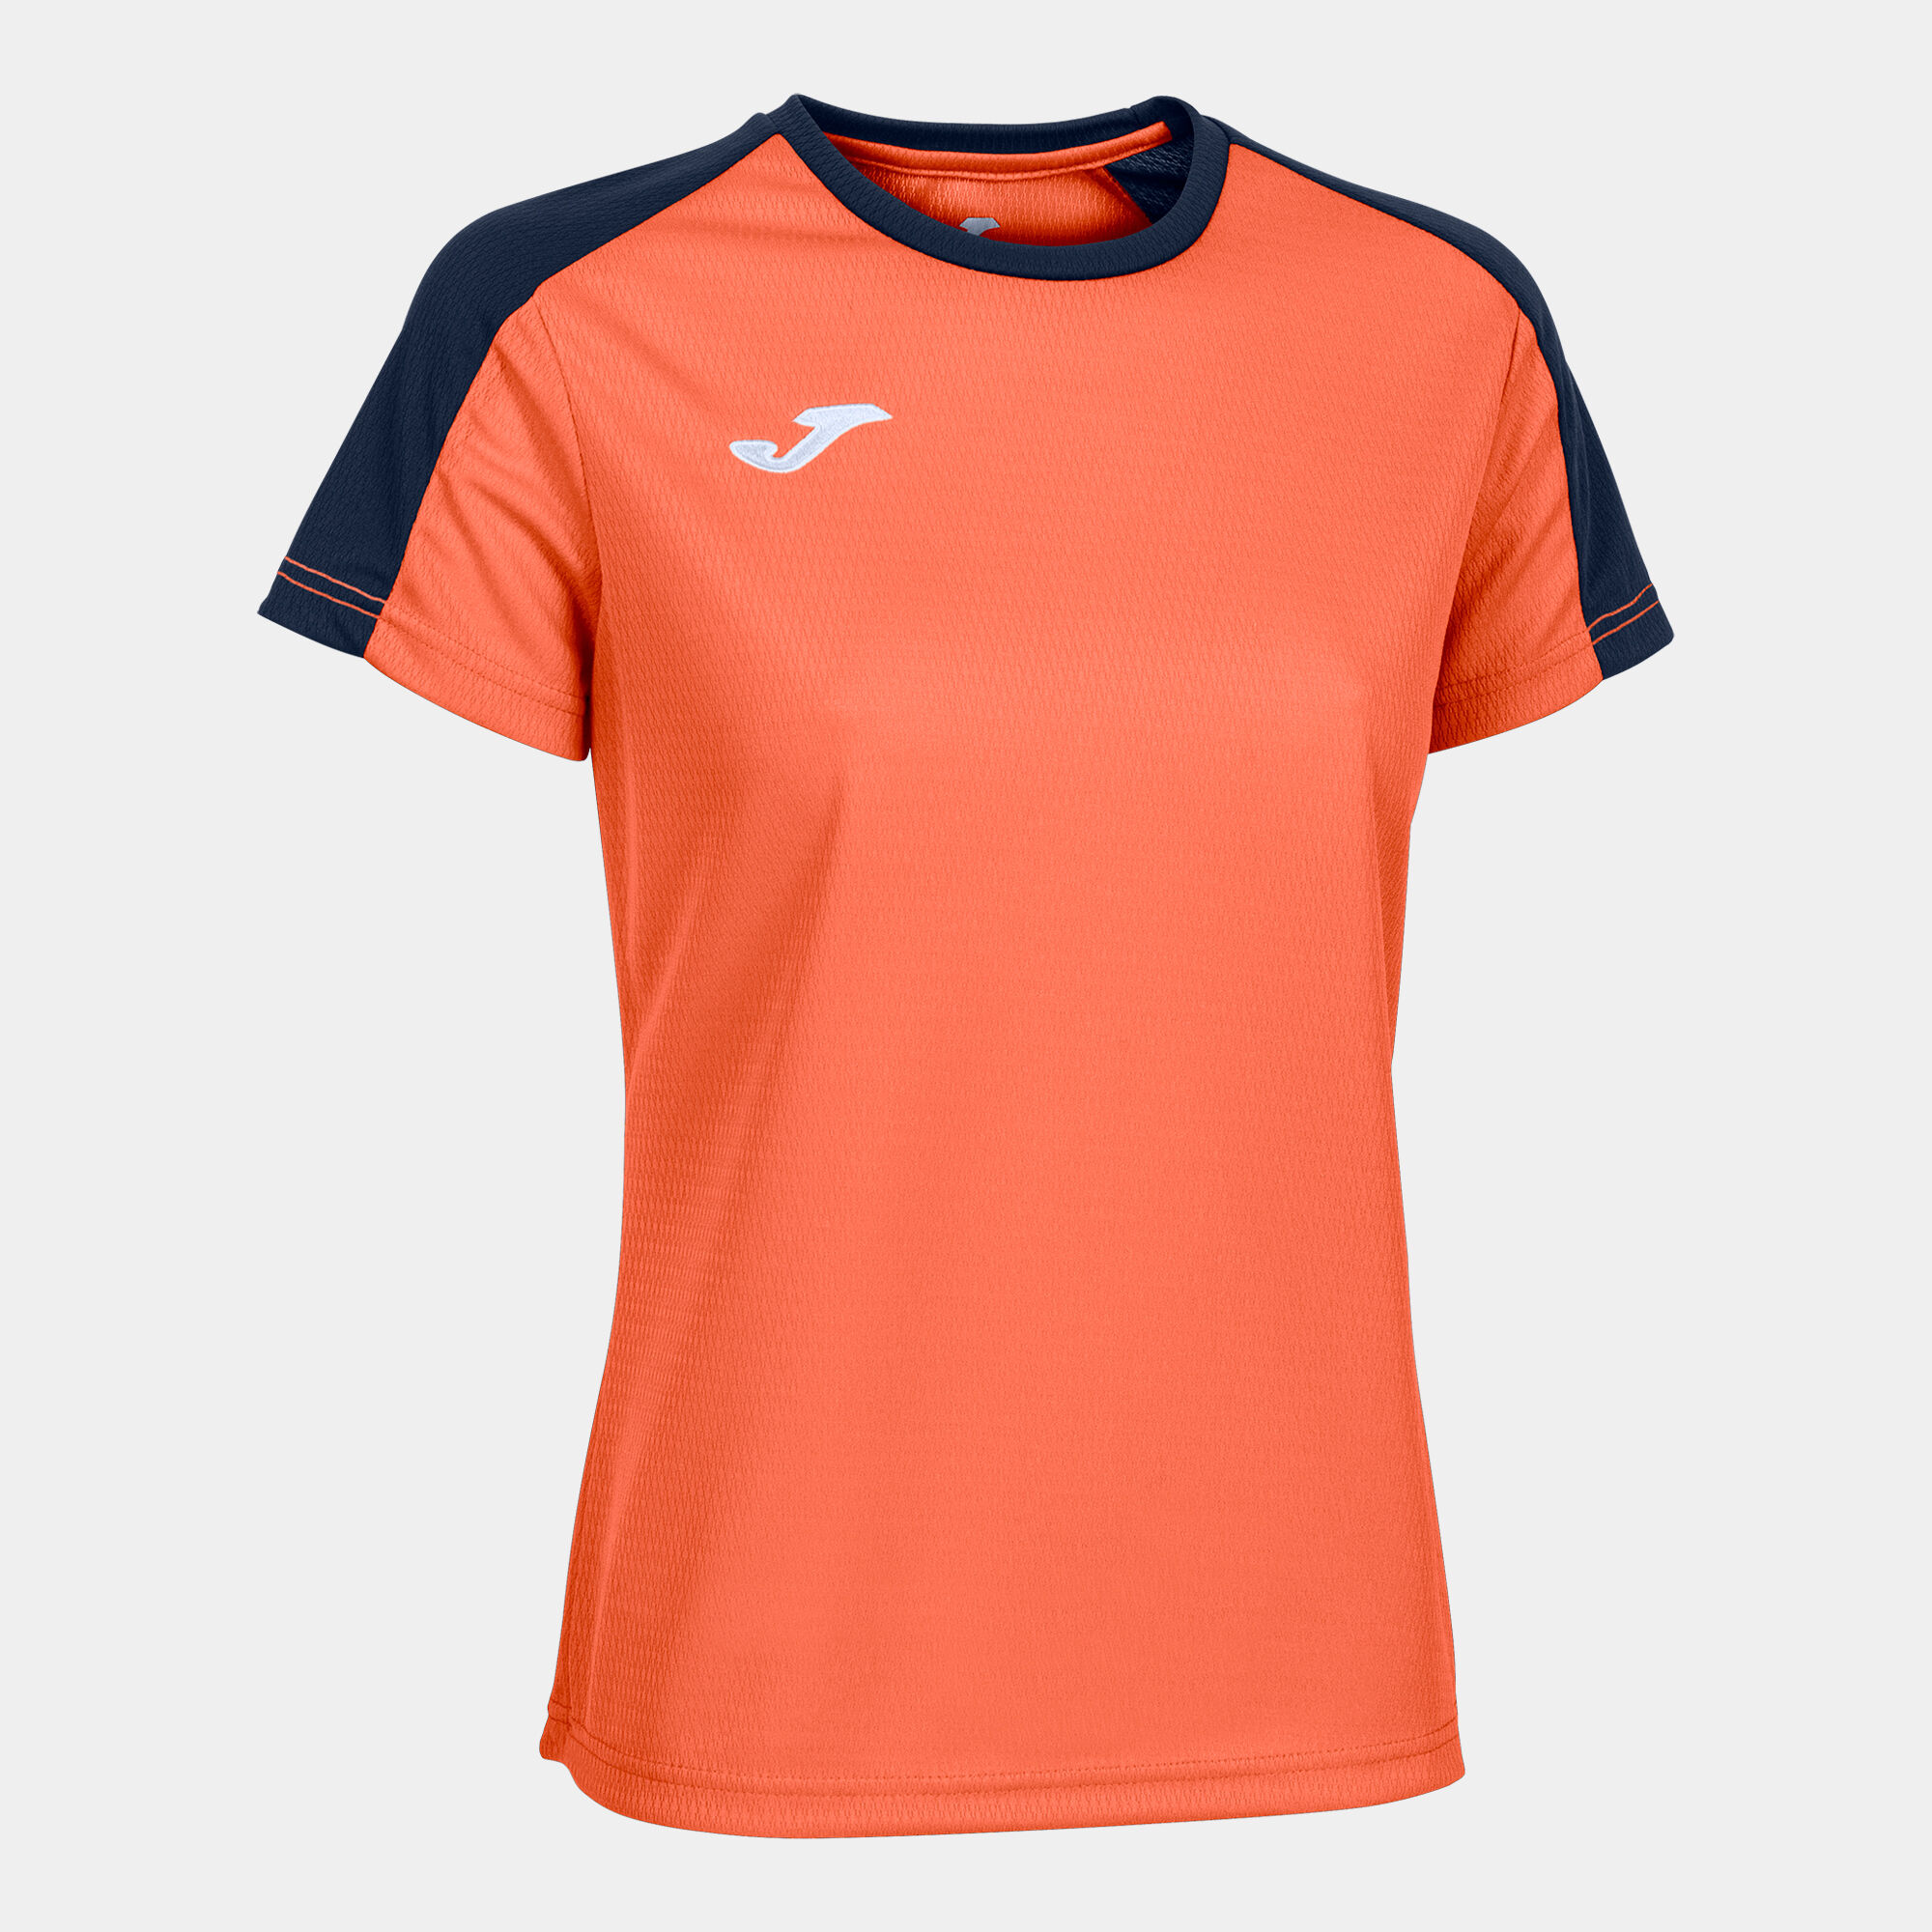 T-shirt manga curta mulher Eco Championship laranja fluorescente azul marinho